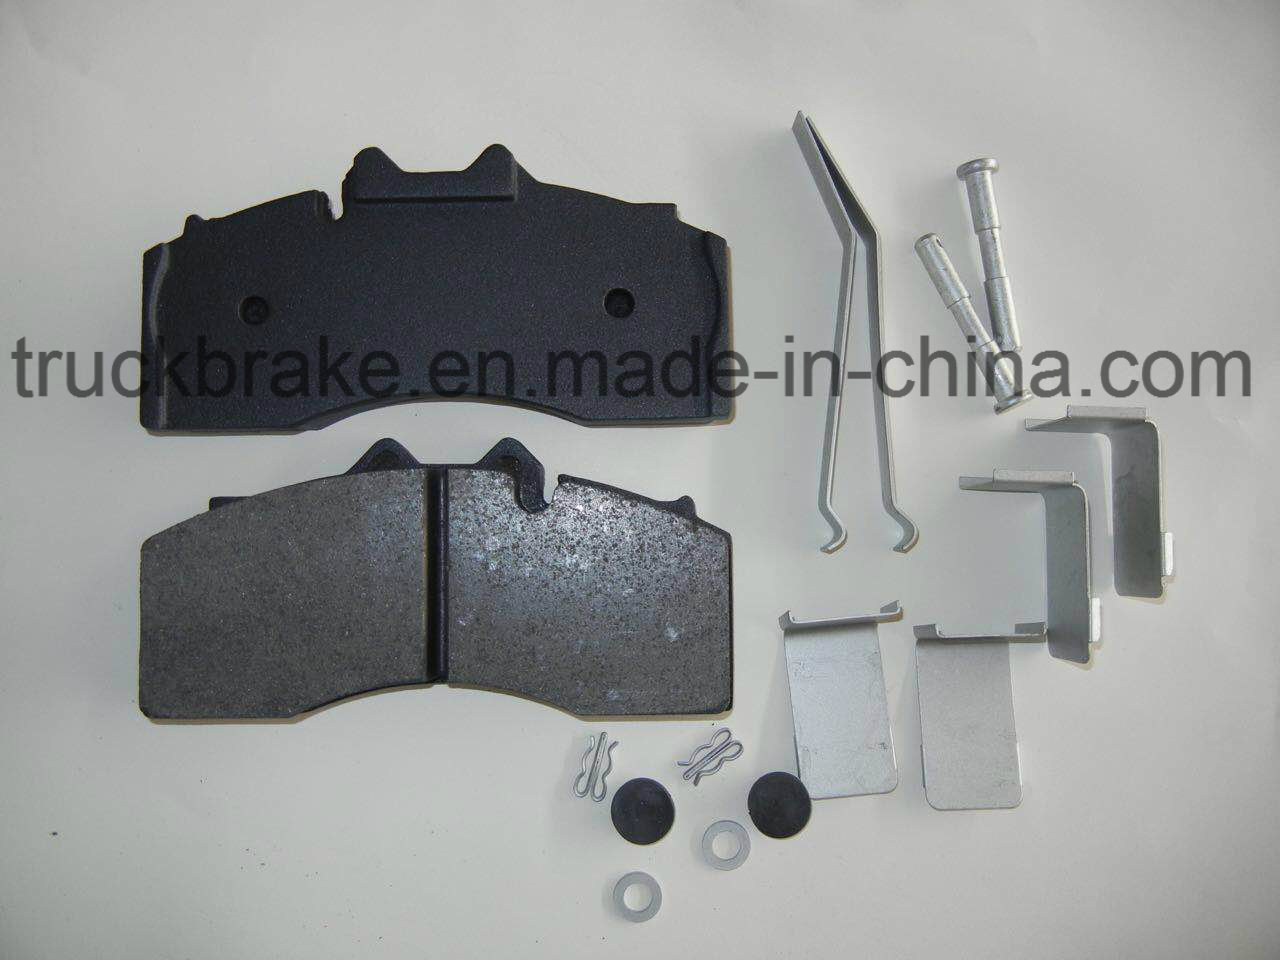 Truck Casting Brake Pad Wva 29228 for Spare Parts